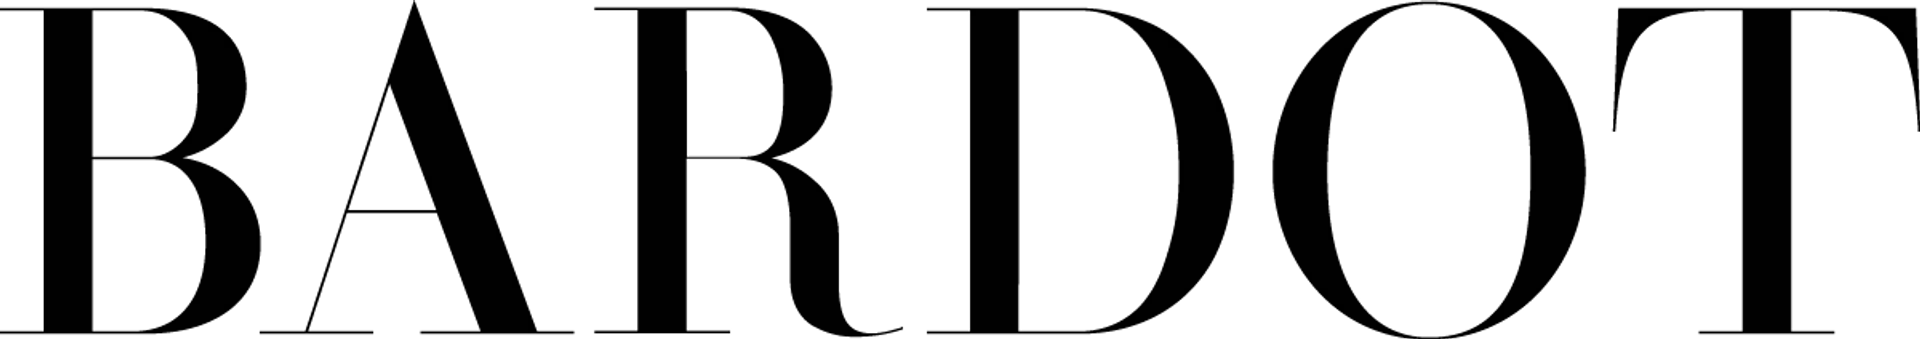 BARDOT logo of current catalogue